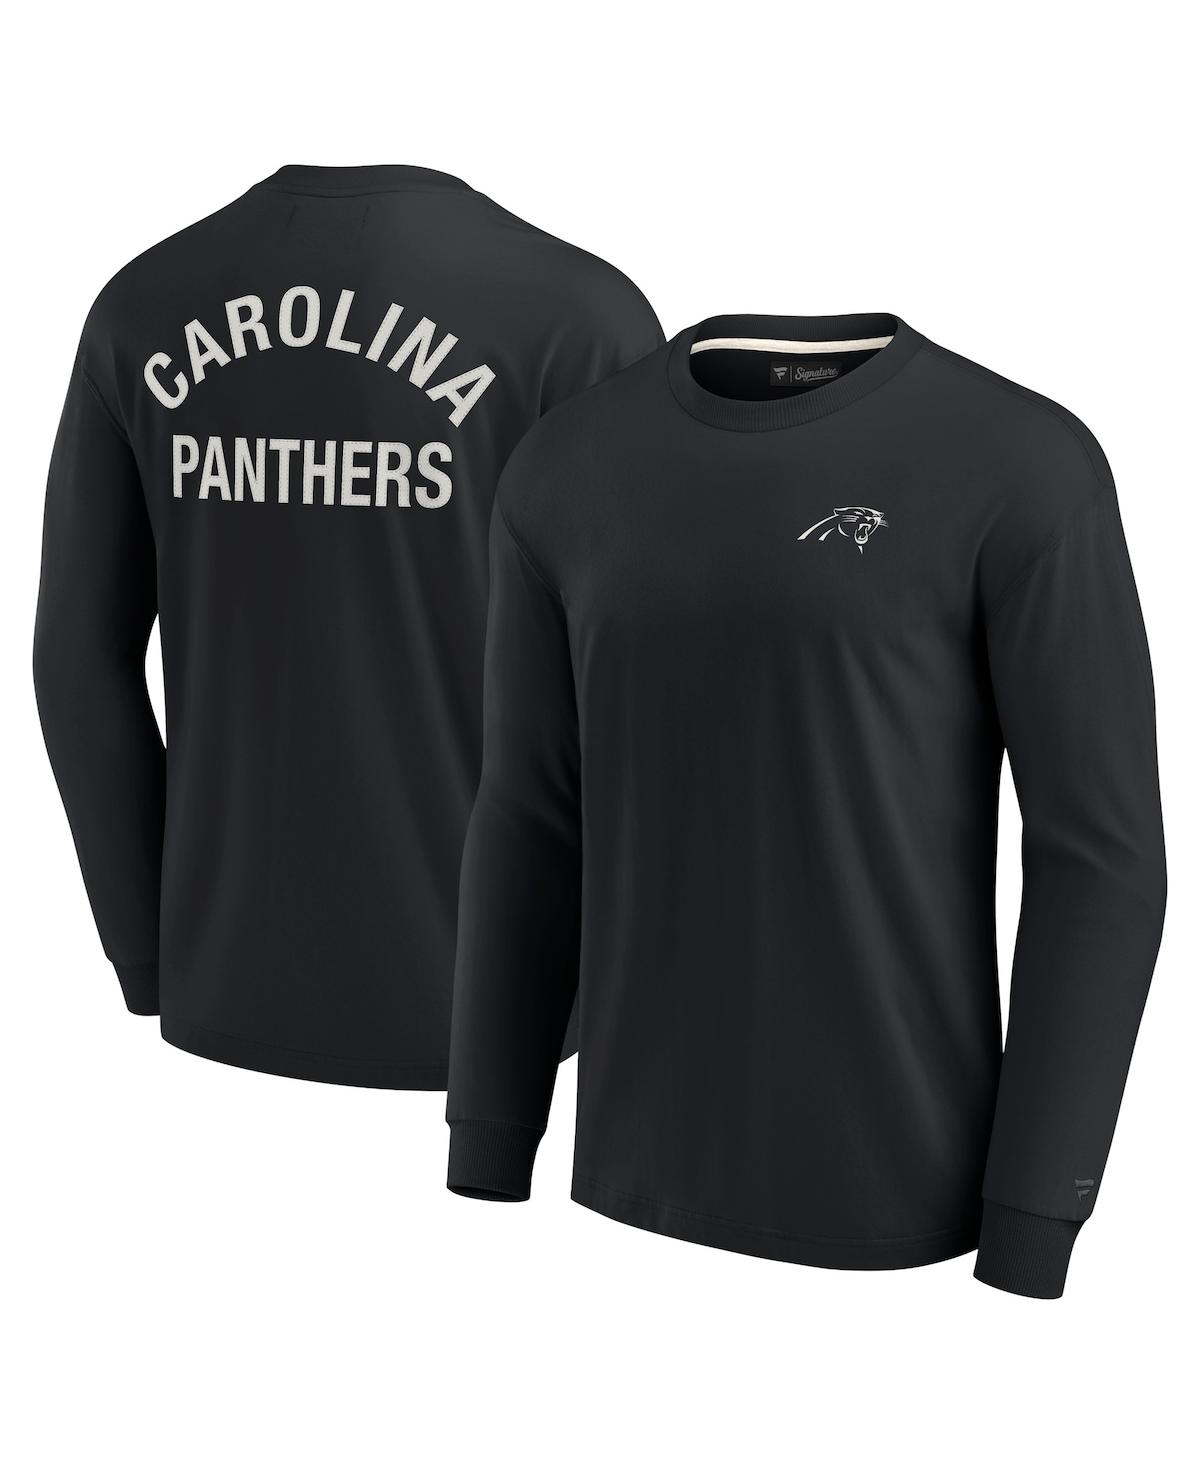 Fanatics Signature Men's And Women's  Black Carolina Panthers Super Soft Long Sleeve T-shirt